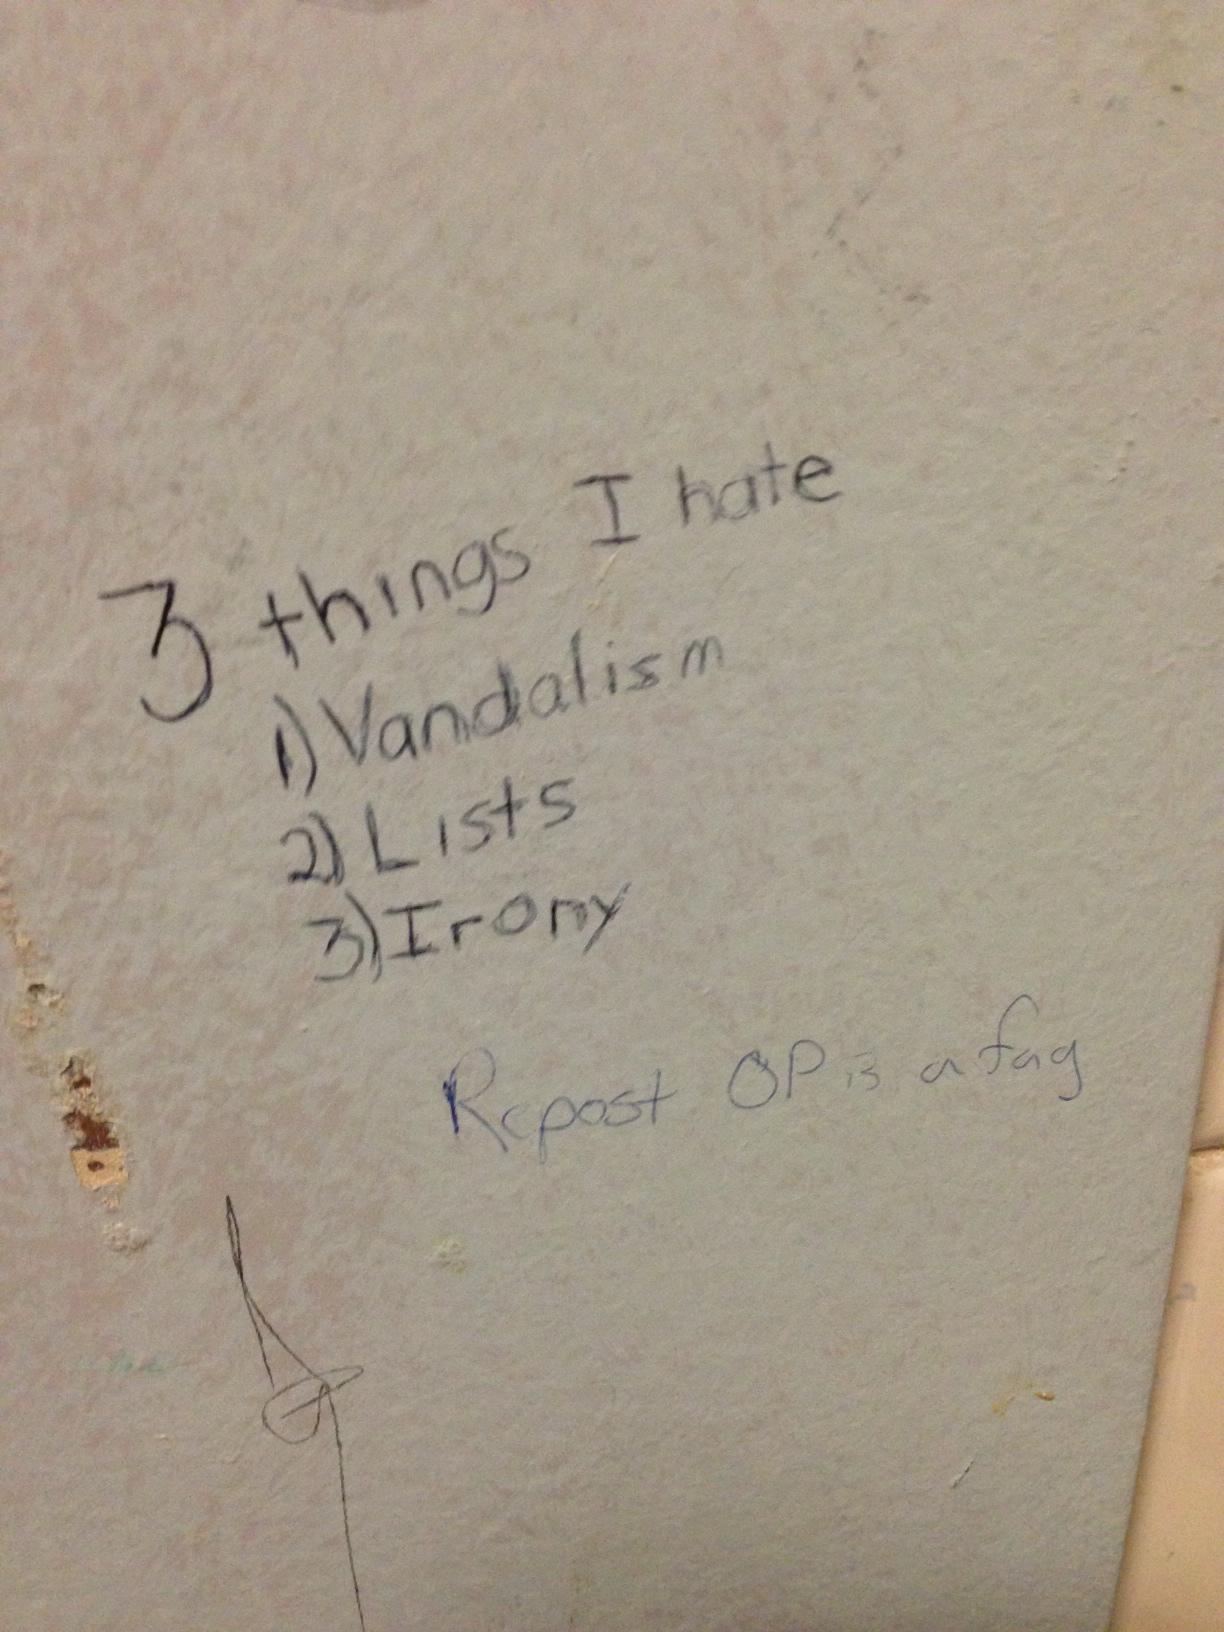 handwriting - 23 things I hate 1 Vandalism 2 Lists 3 Irony Repost Op is atag